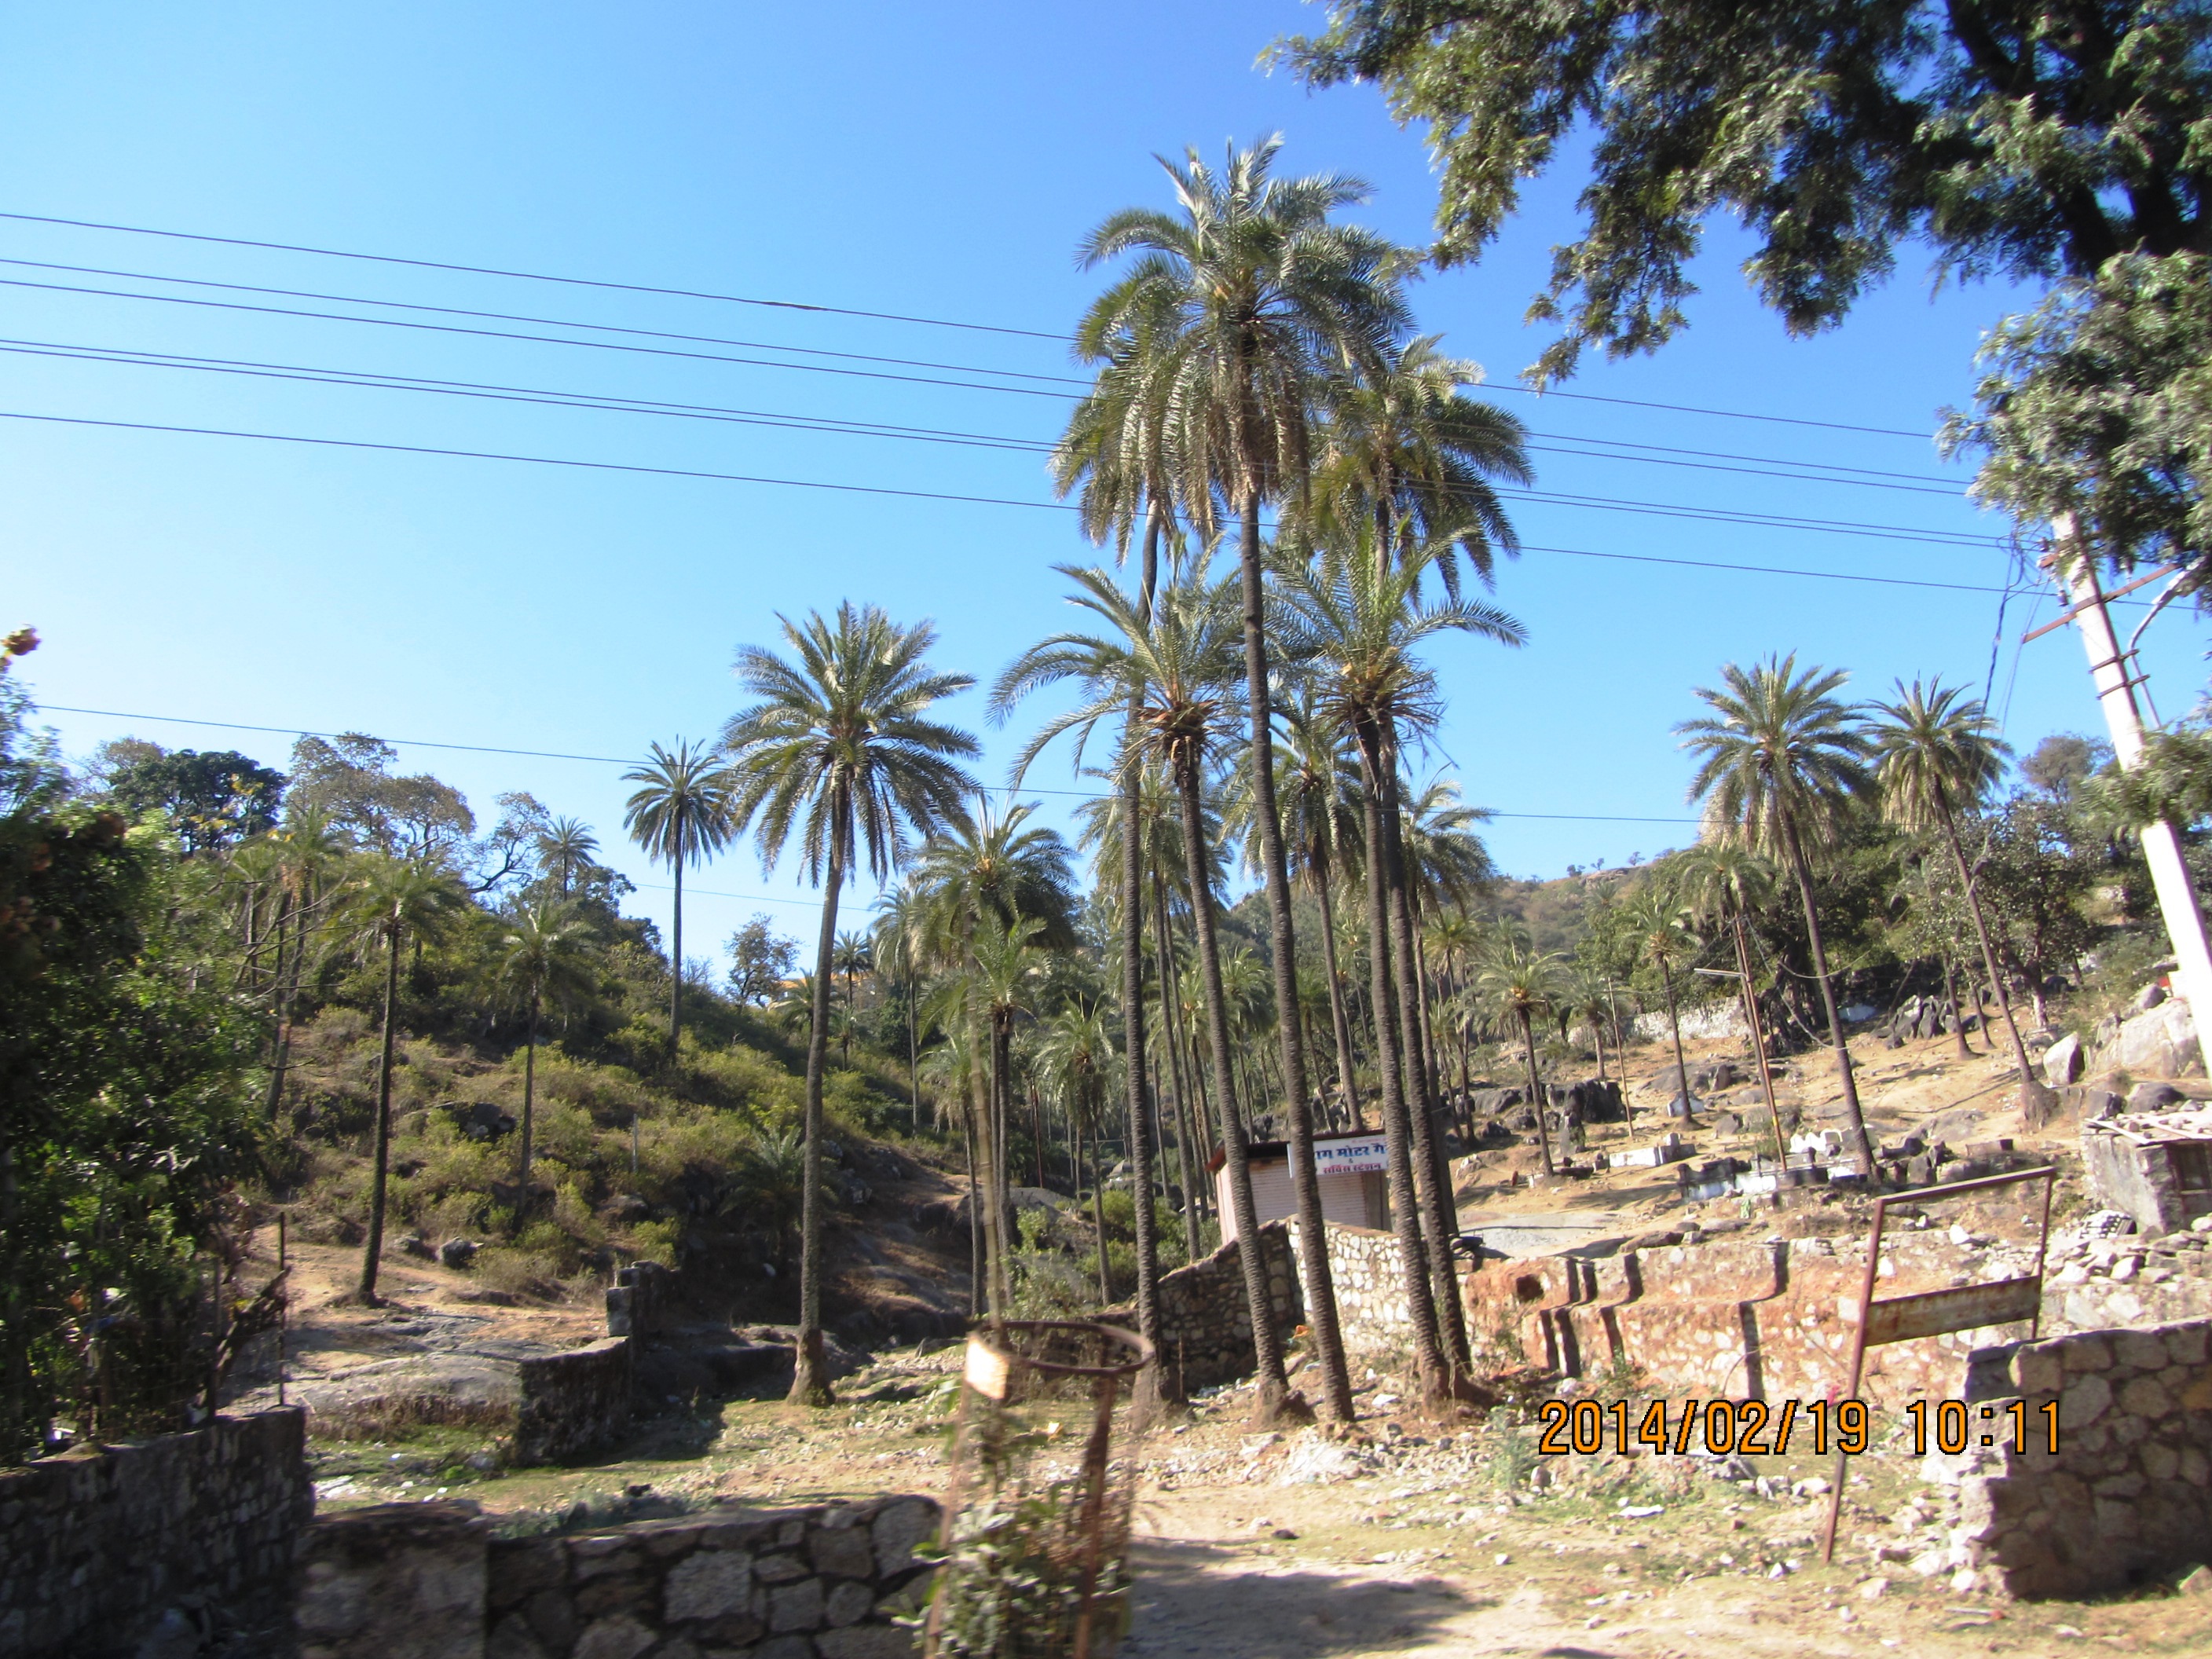 Cemetery - Mount Abu